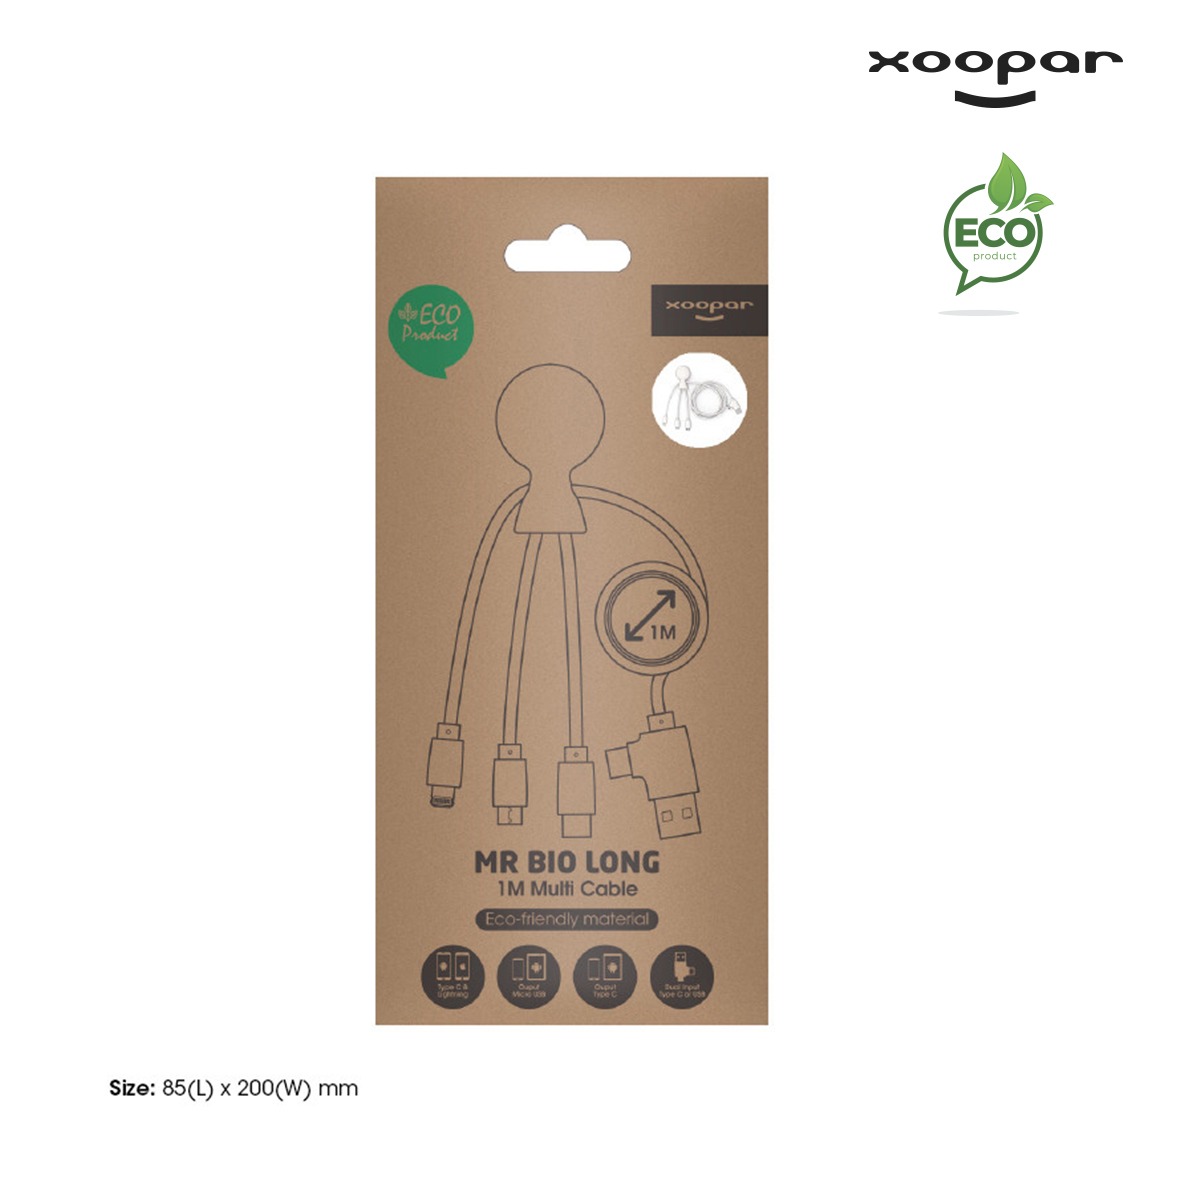 Cable multi connectiques – Mr bio Long recycle Xoopar personnalise-11